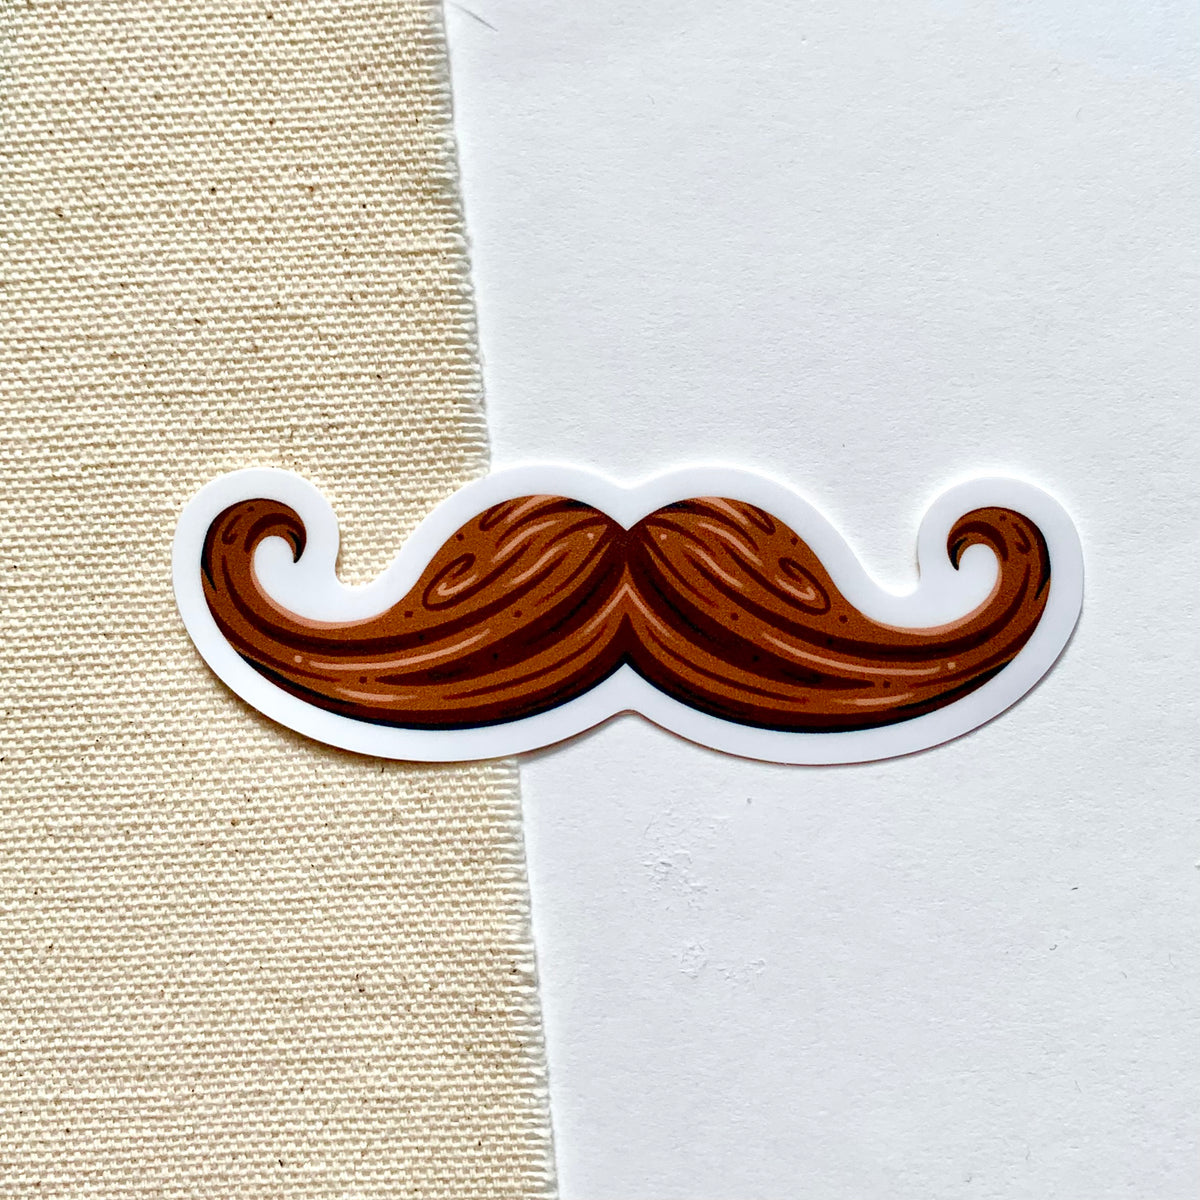 Mustachio Sticker